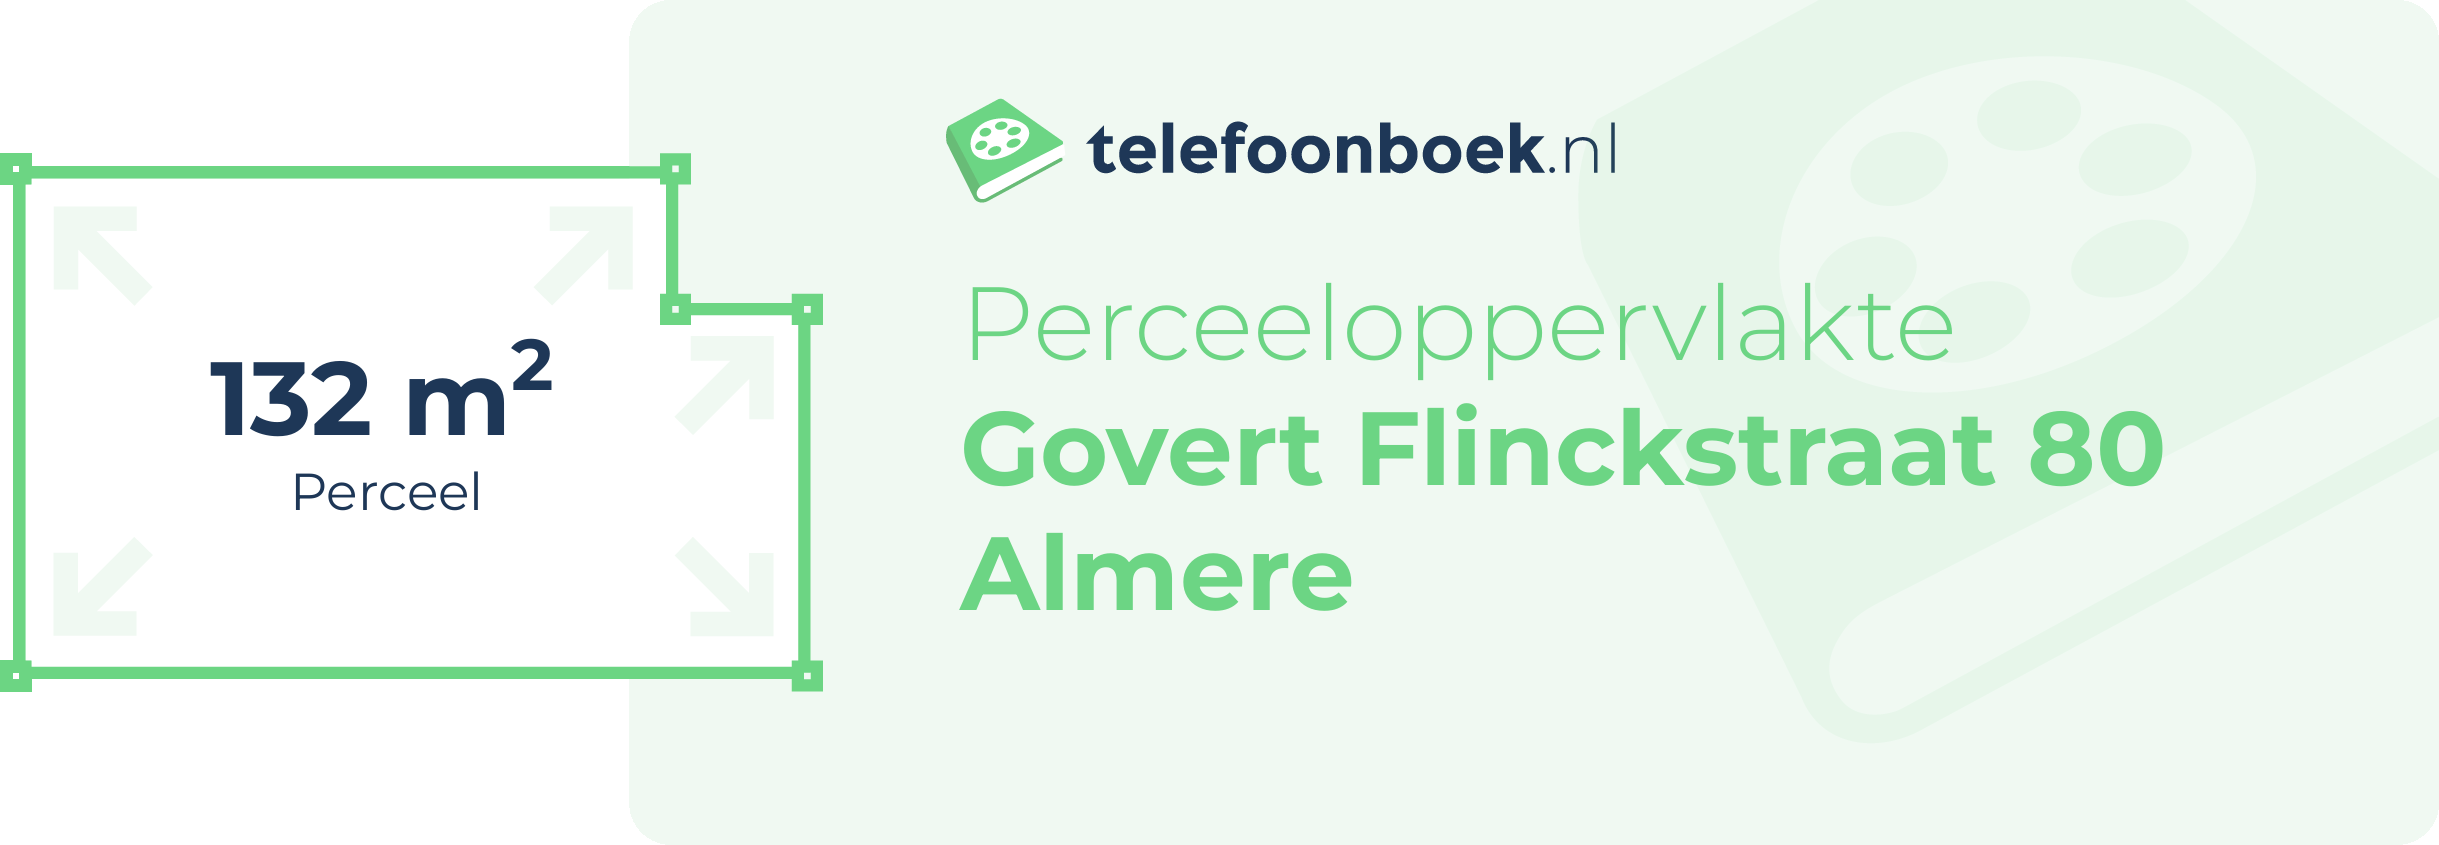 Perceeloppervlakte Govert Flinckstraat 80 Almere